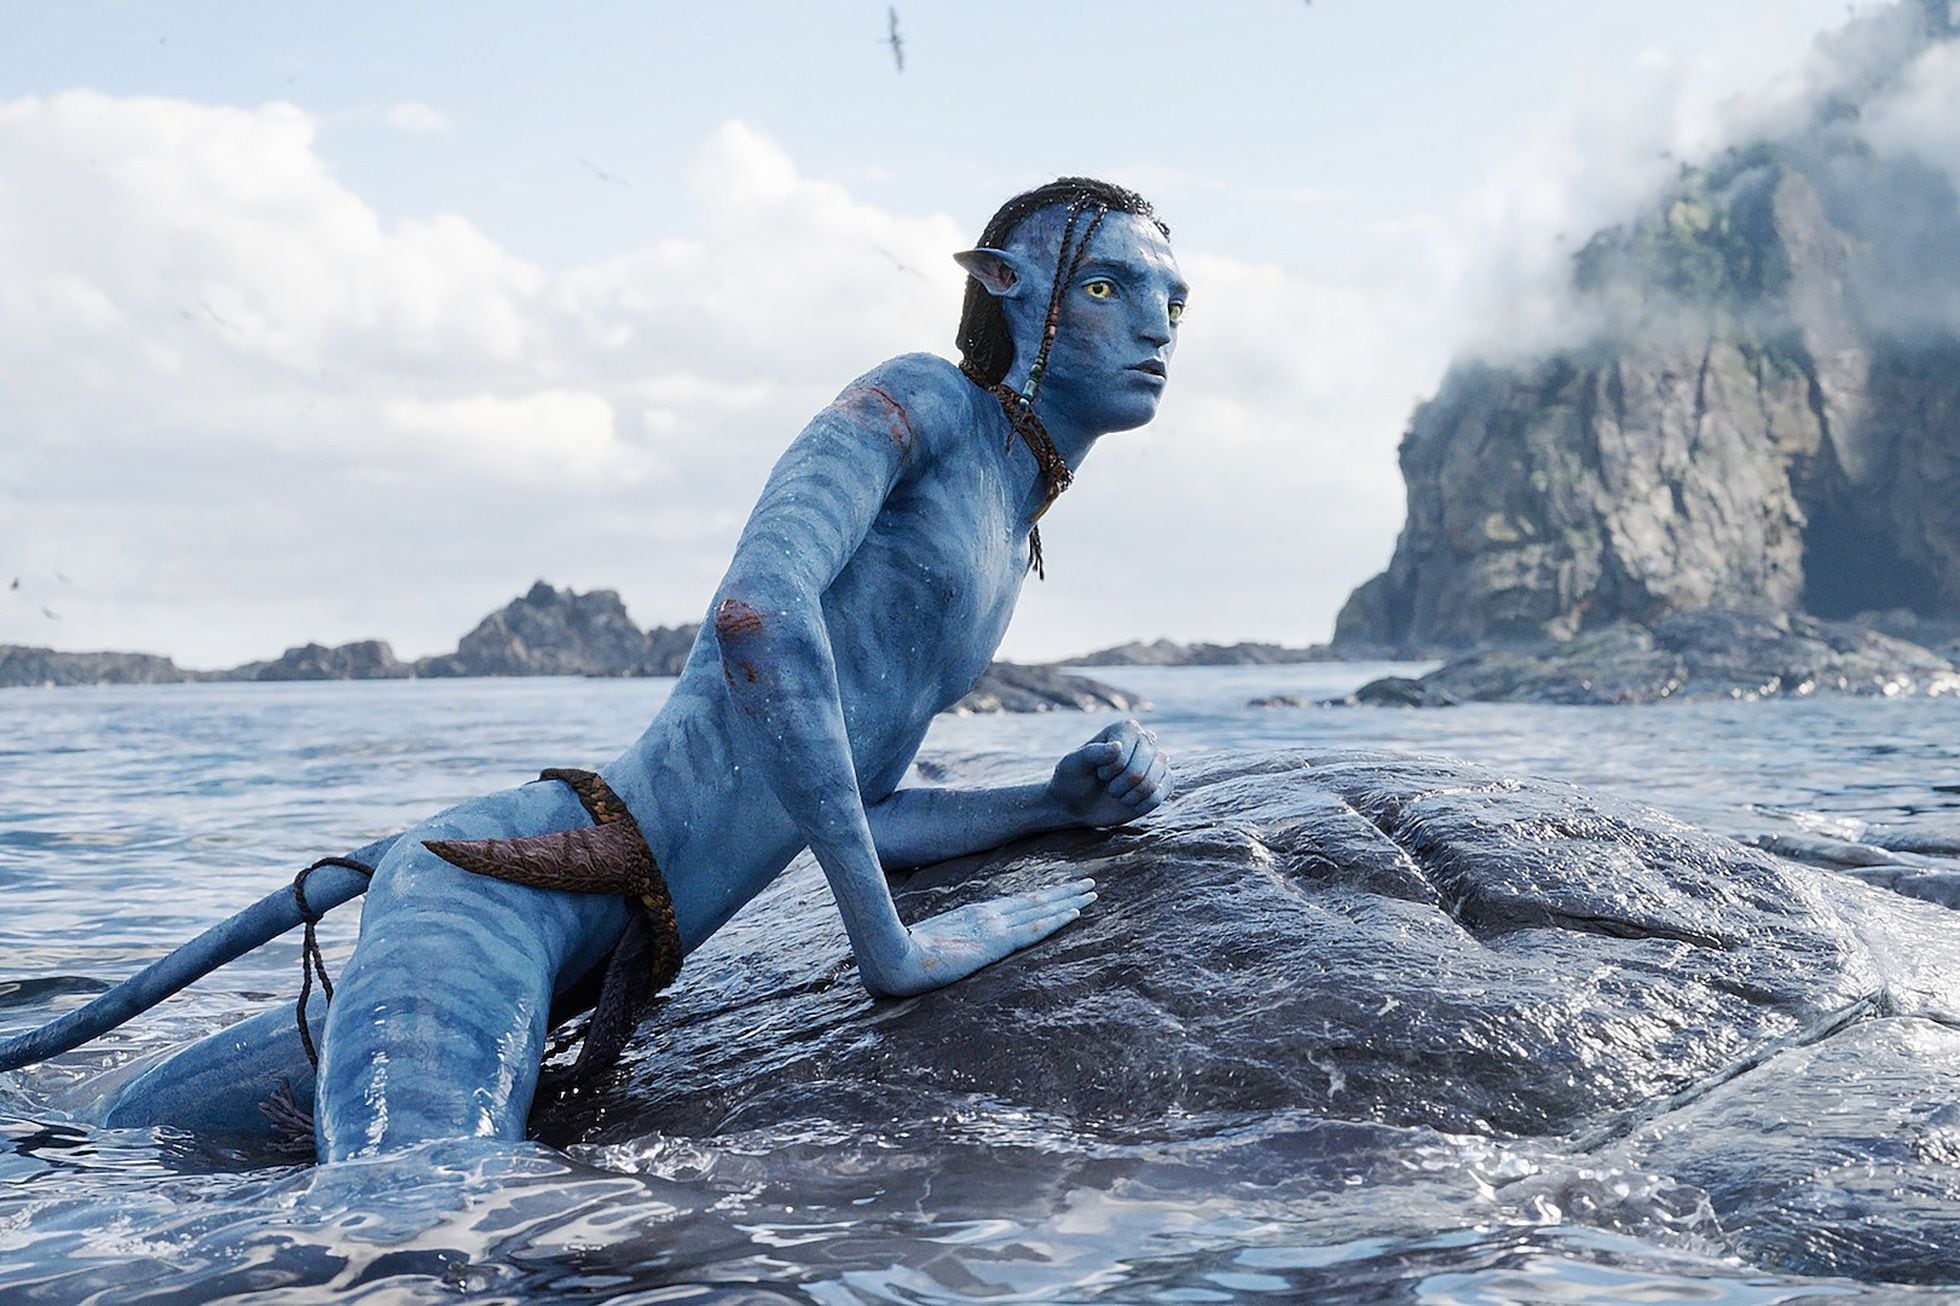 Assistir The King's Avatar 2 Todos os episódios online.